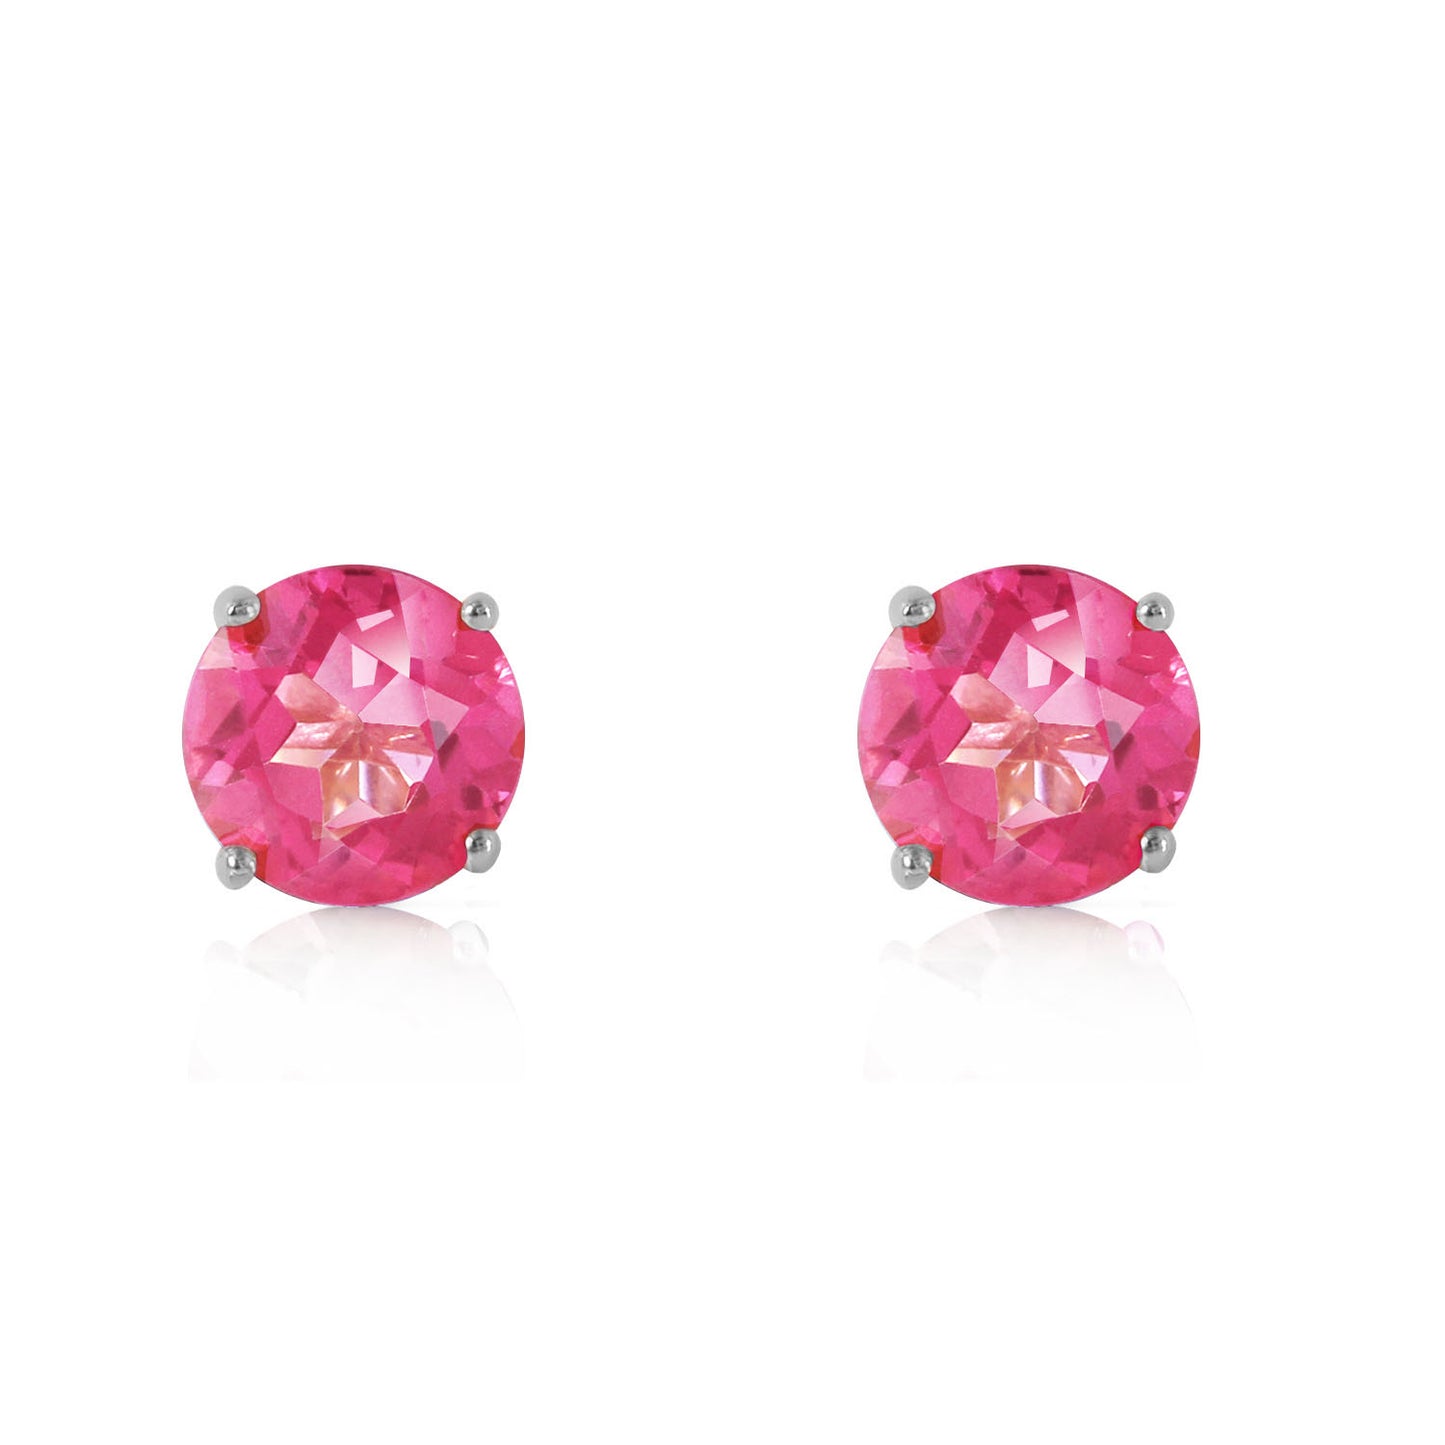 1.3 Carat 14K Solid Gold Pink In June Pink Topaz Earrings